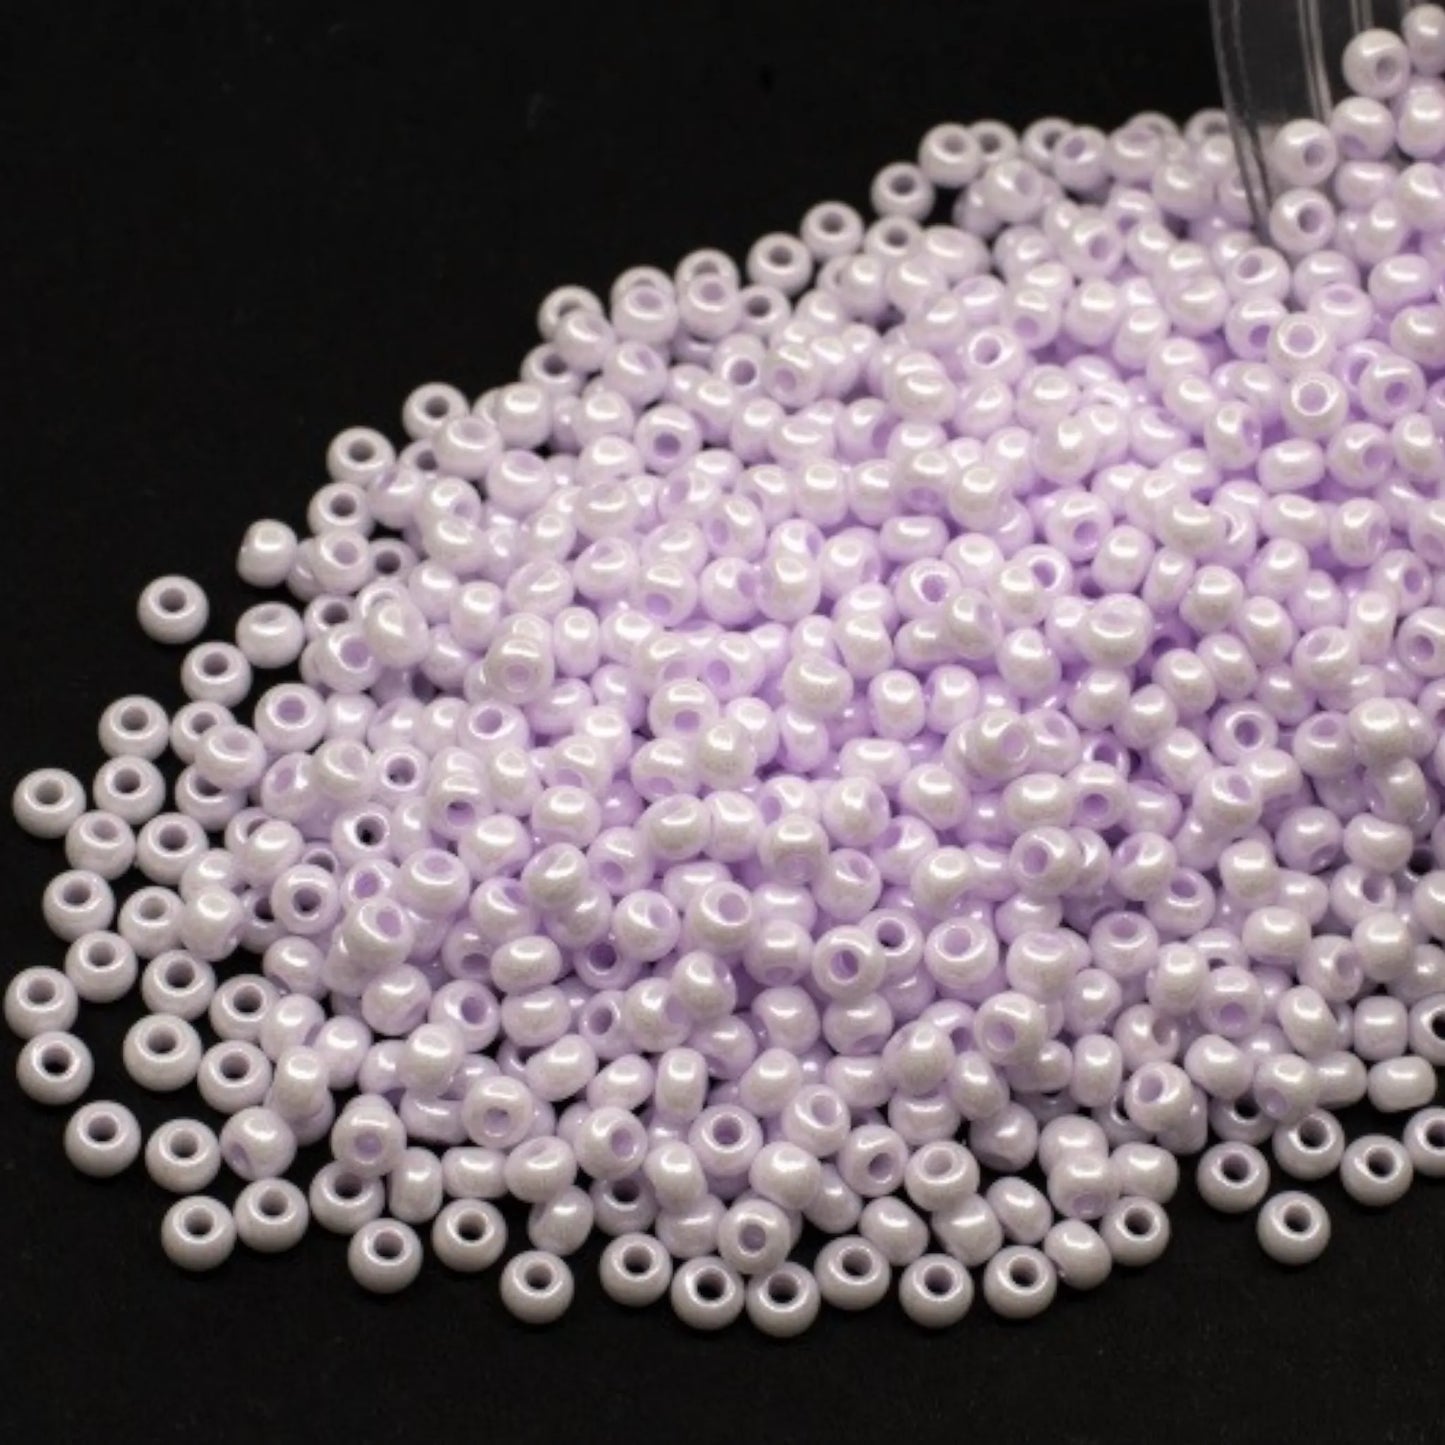 16228 Czech seed beads PRECIOSA round 10/0 white lilac. Chalk - Terra Pearl.